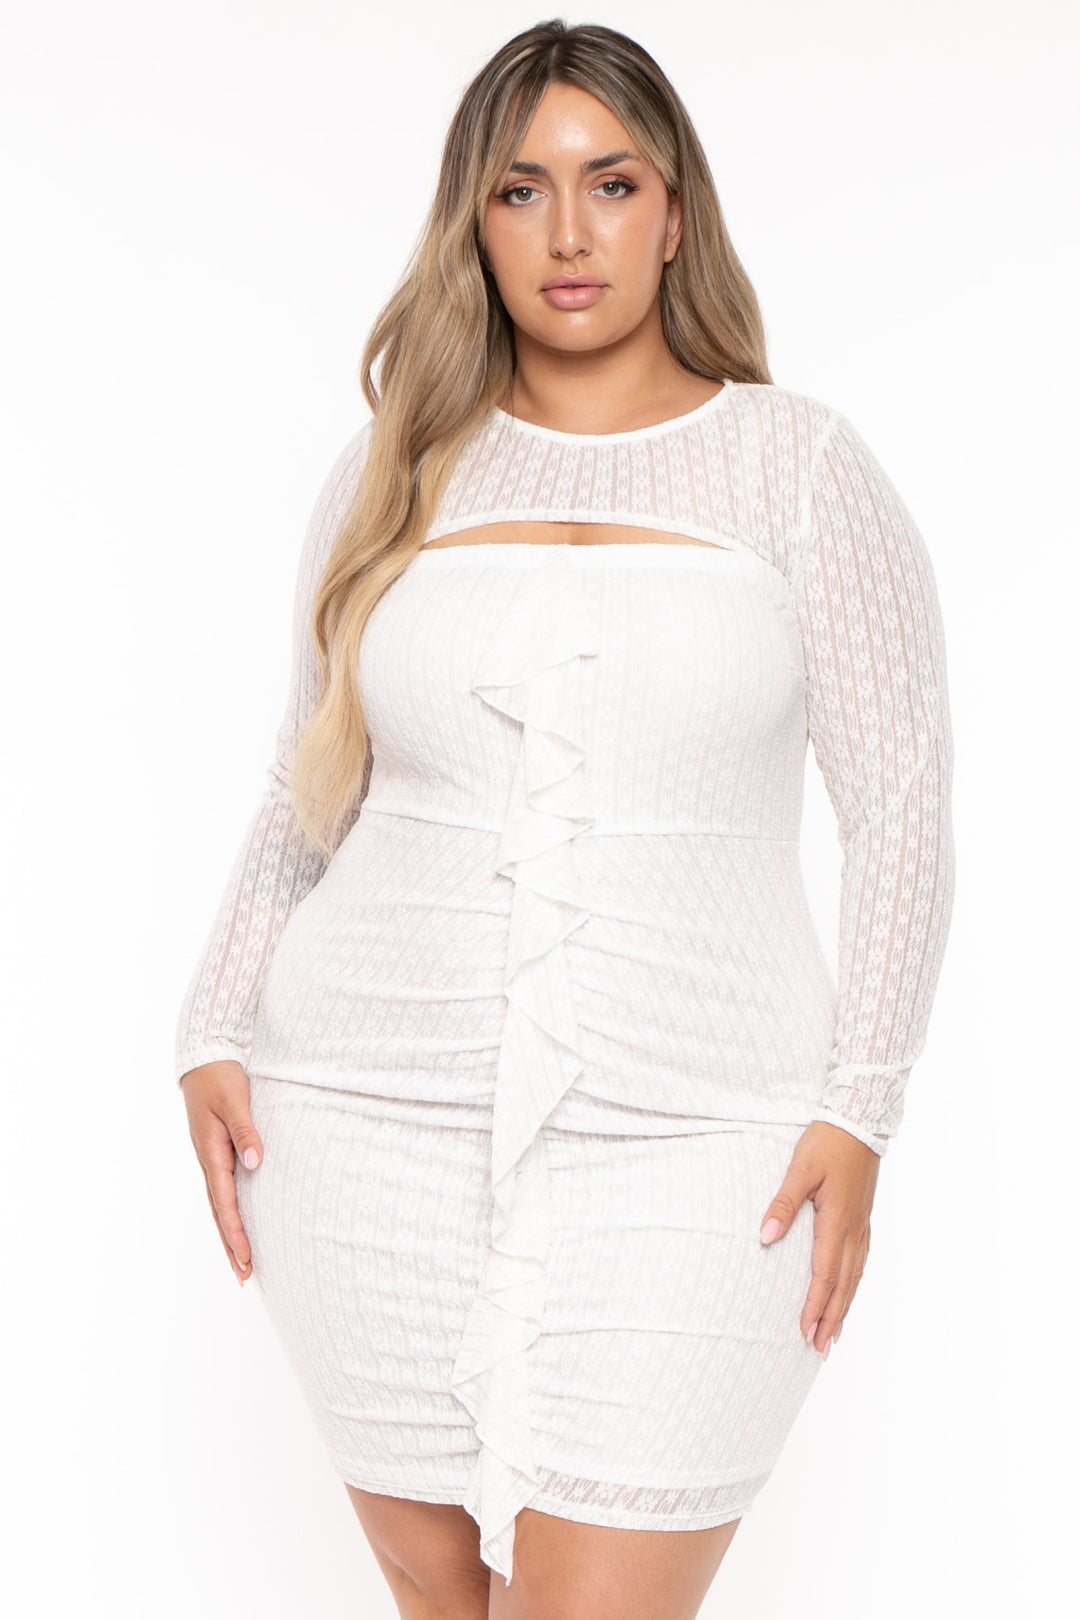 Curvy Sense Dresses Plus Size Krystal Front Ruffle With Shrug  Dress - White